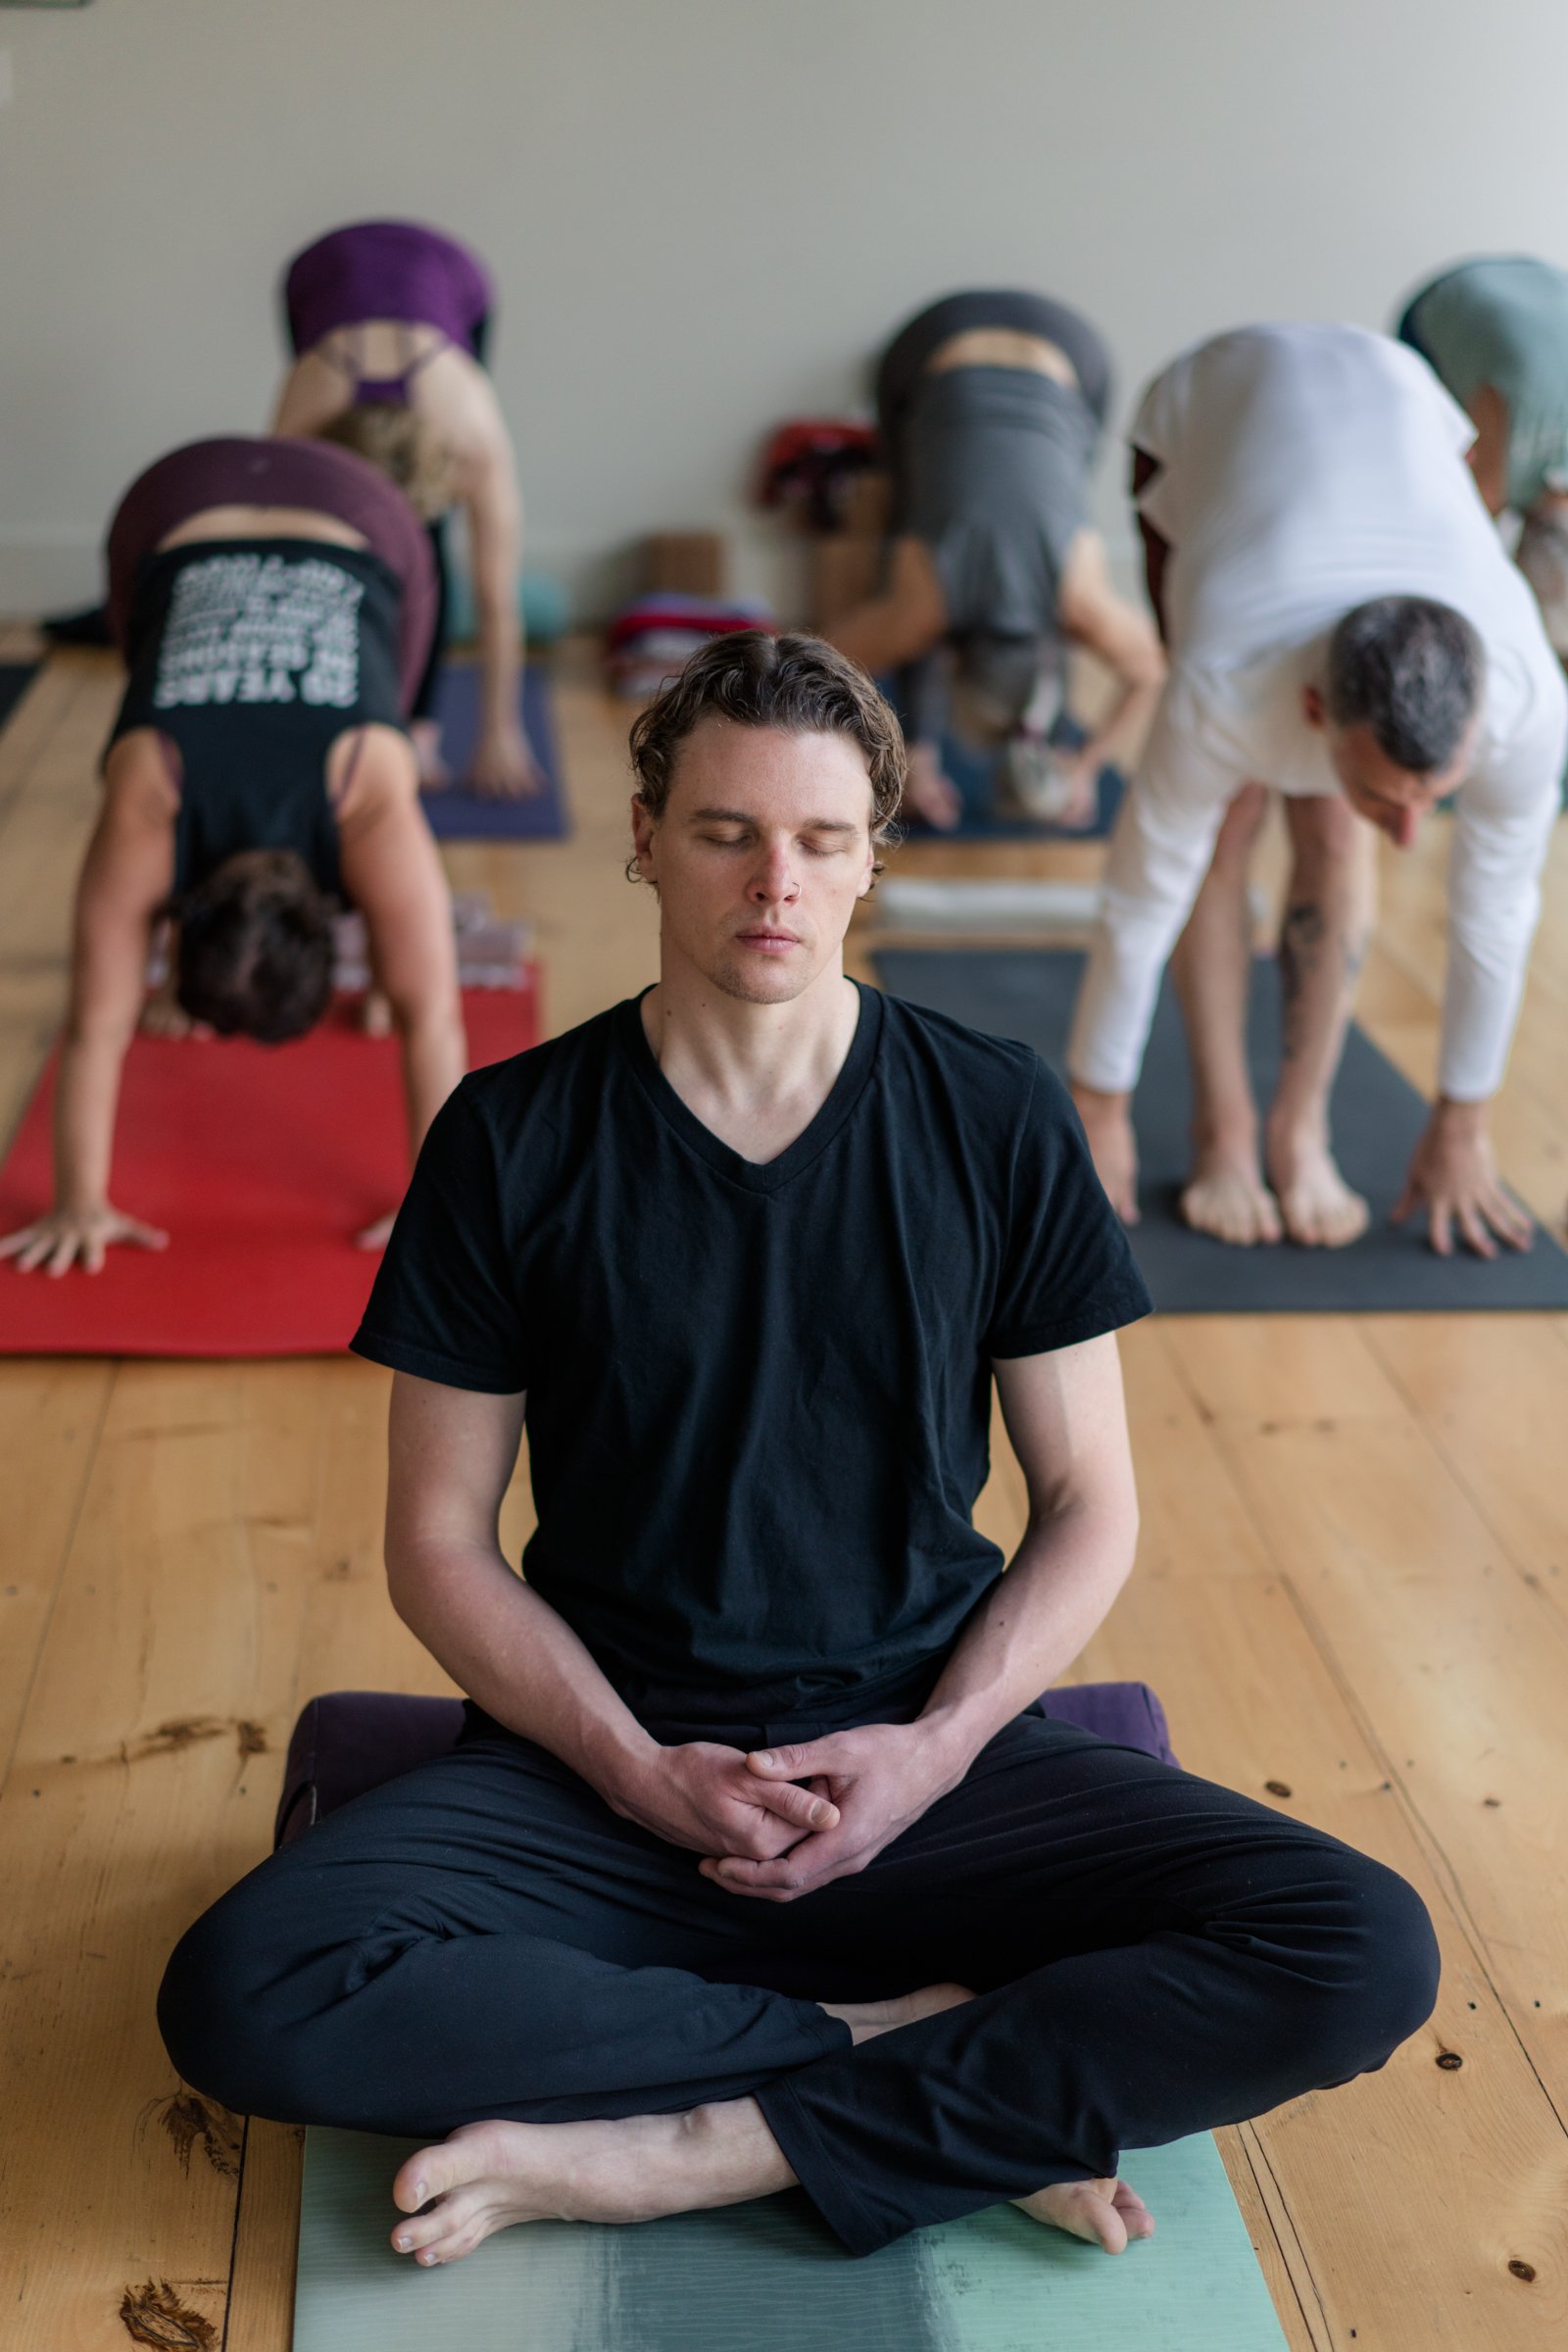 Learn Breathing Practices  Pranayama Classes - Yoga 2 Hear